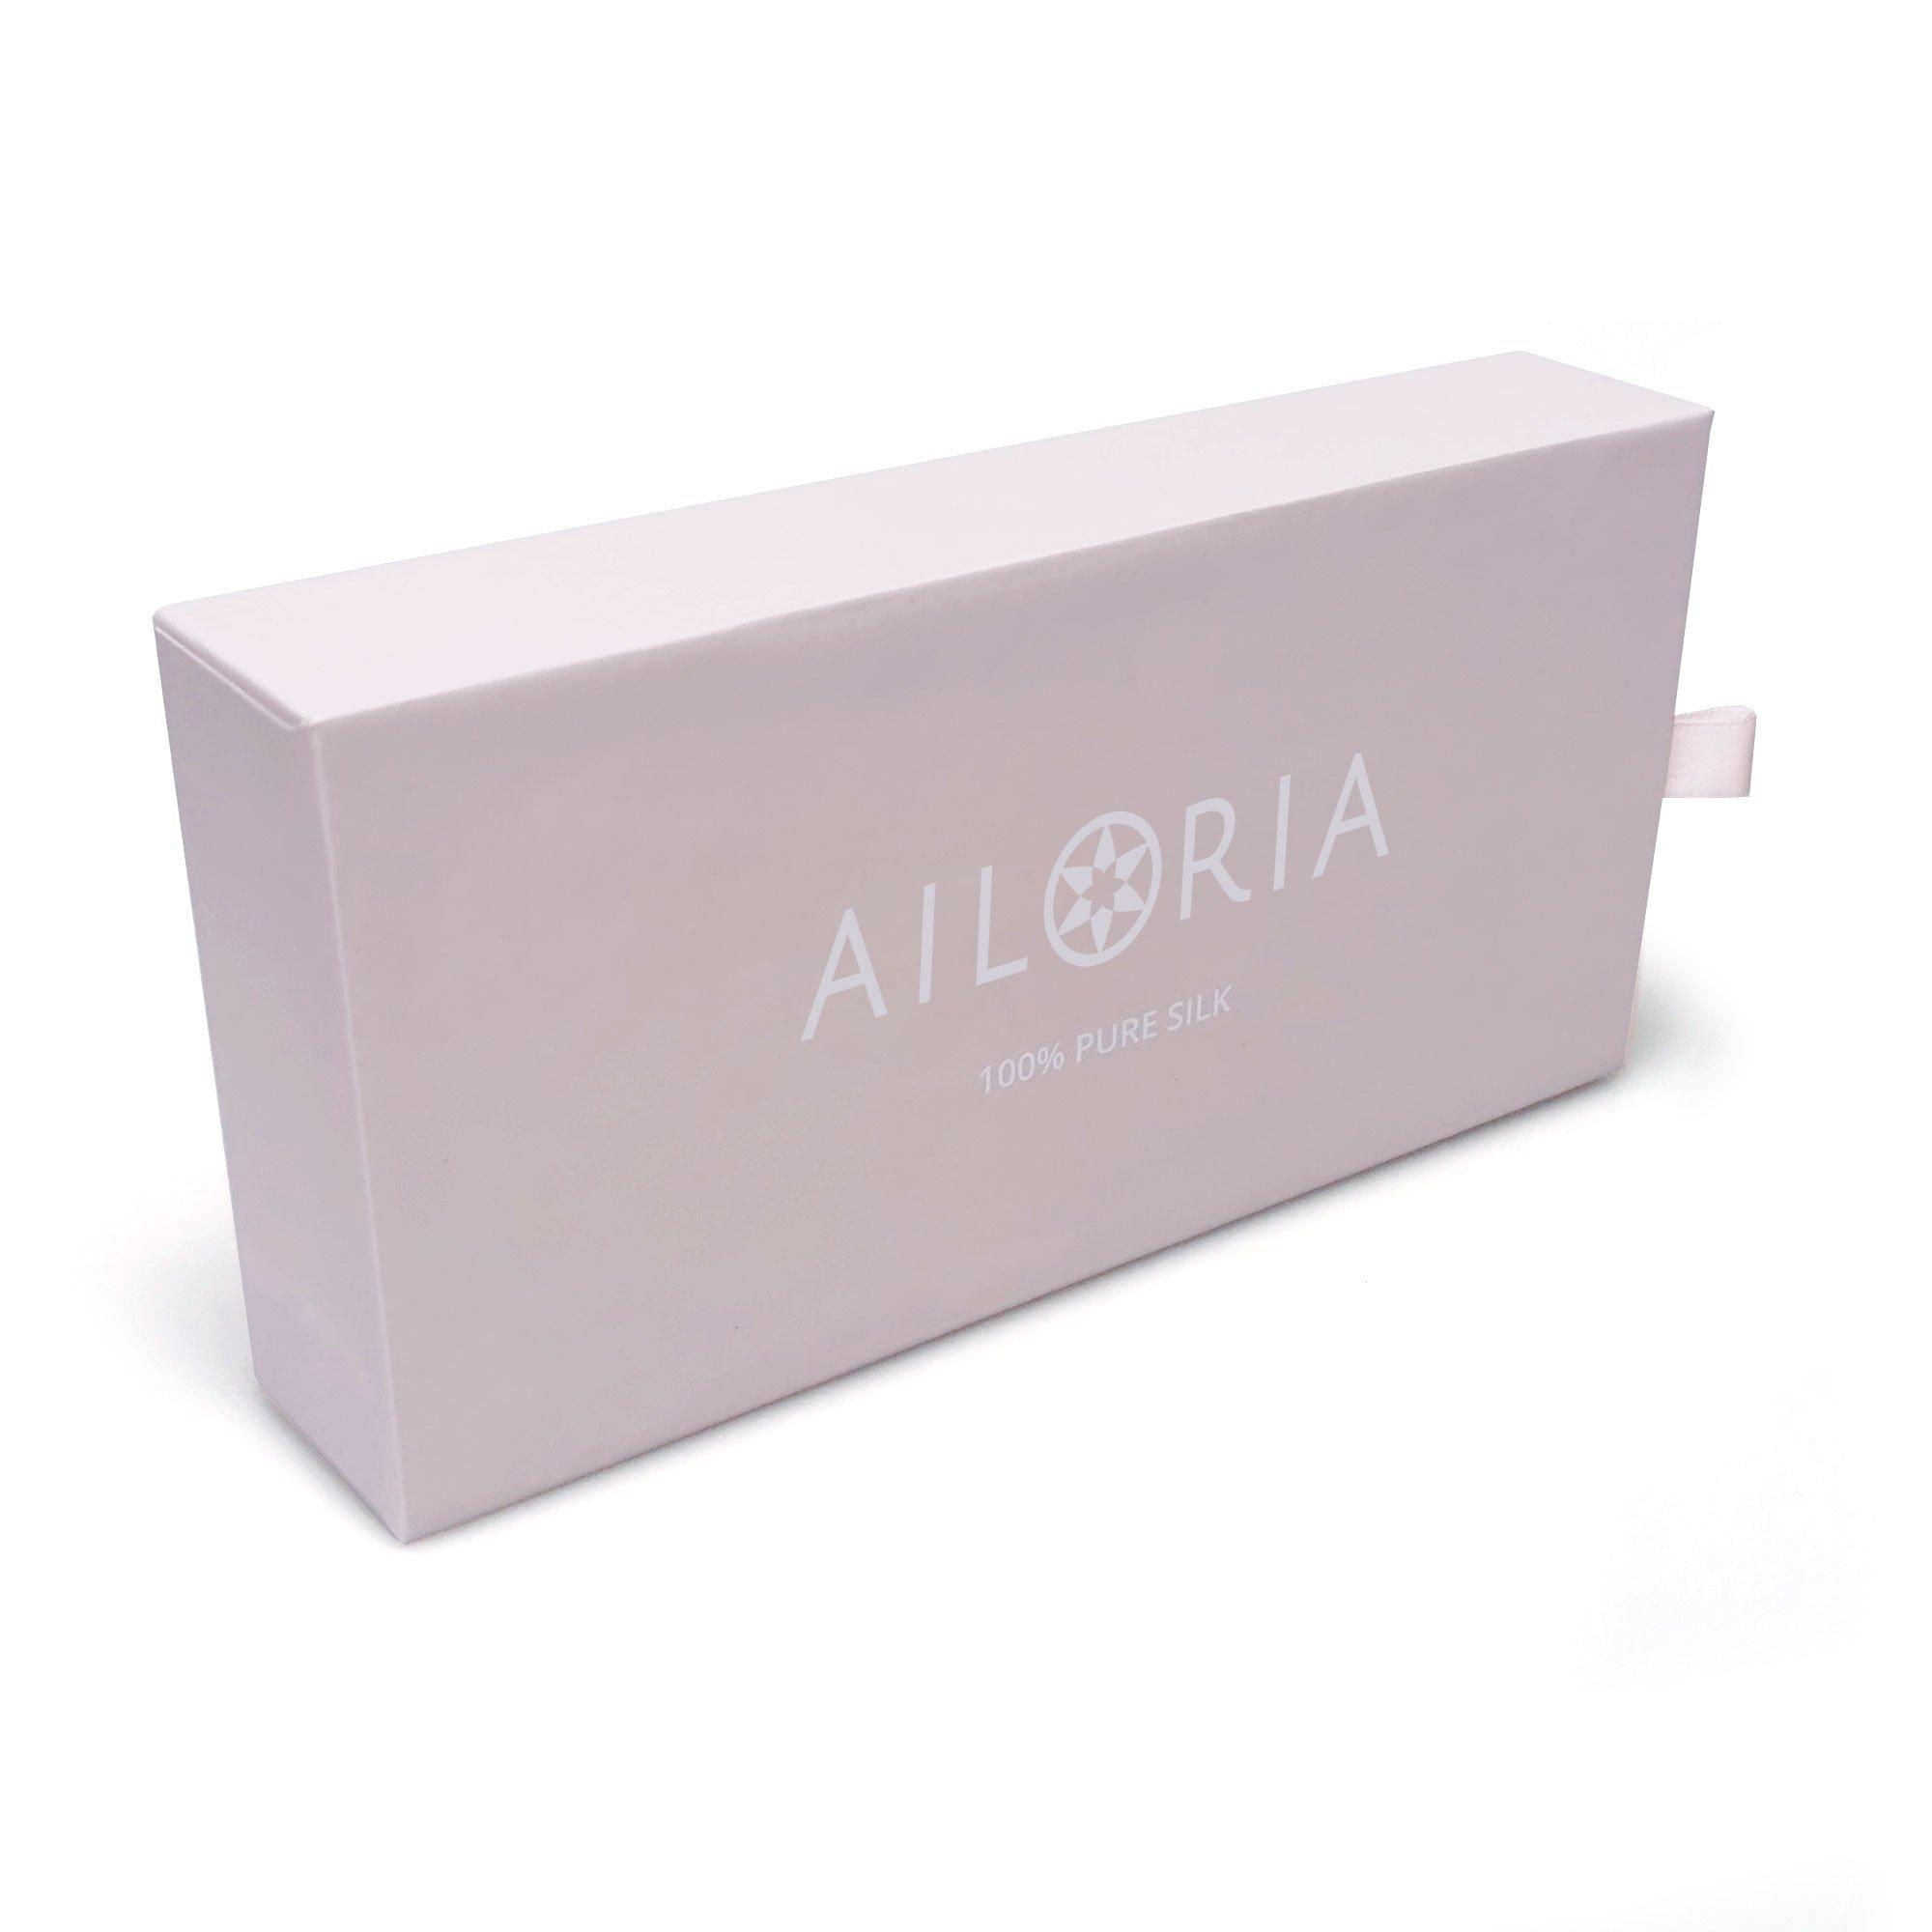 AILORIA BEAUTY SLEEP (40x60)  